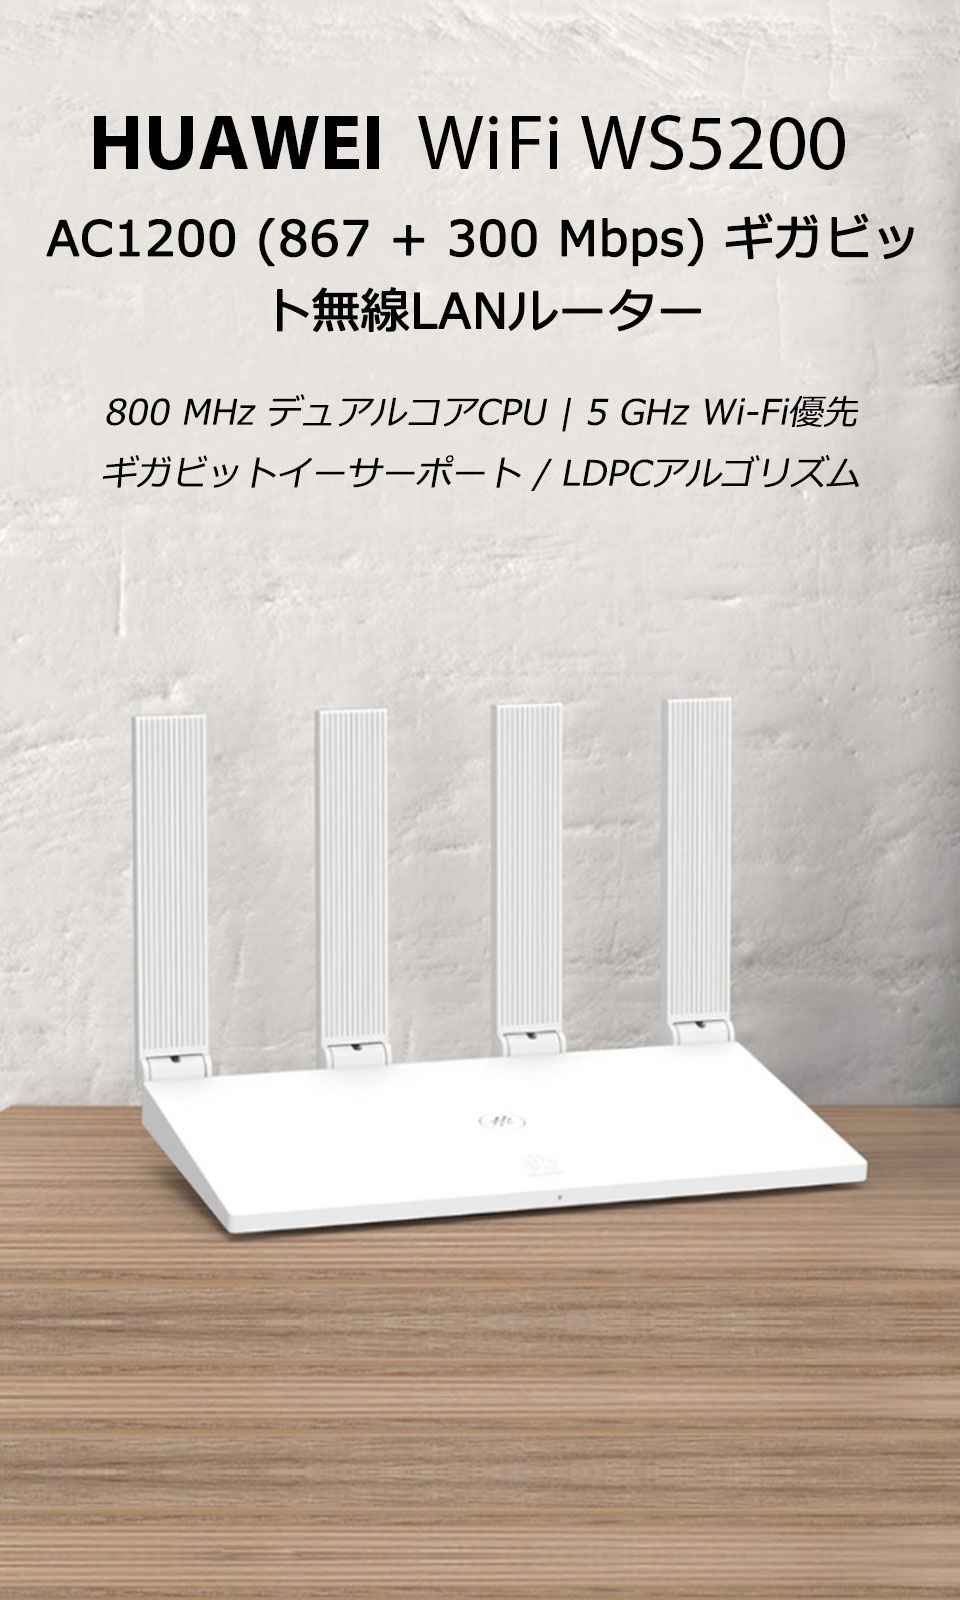 HUAWEI Wi-Fi WS5200